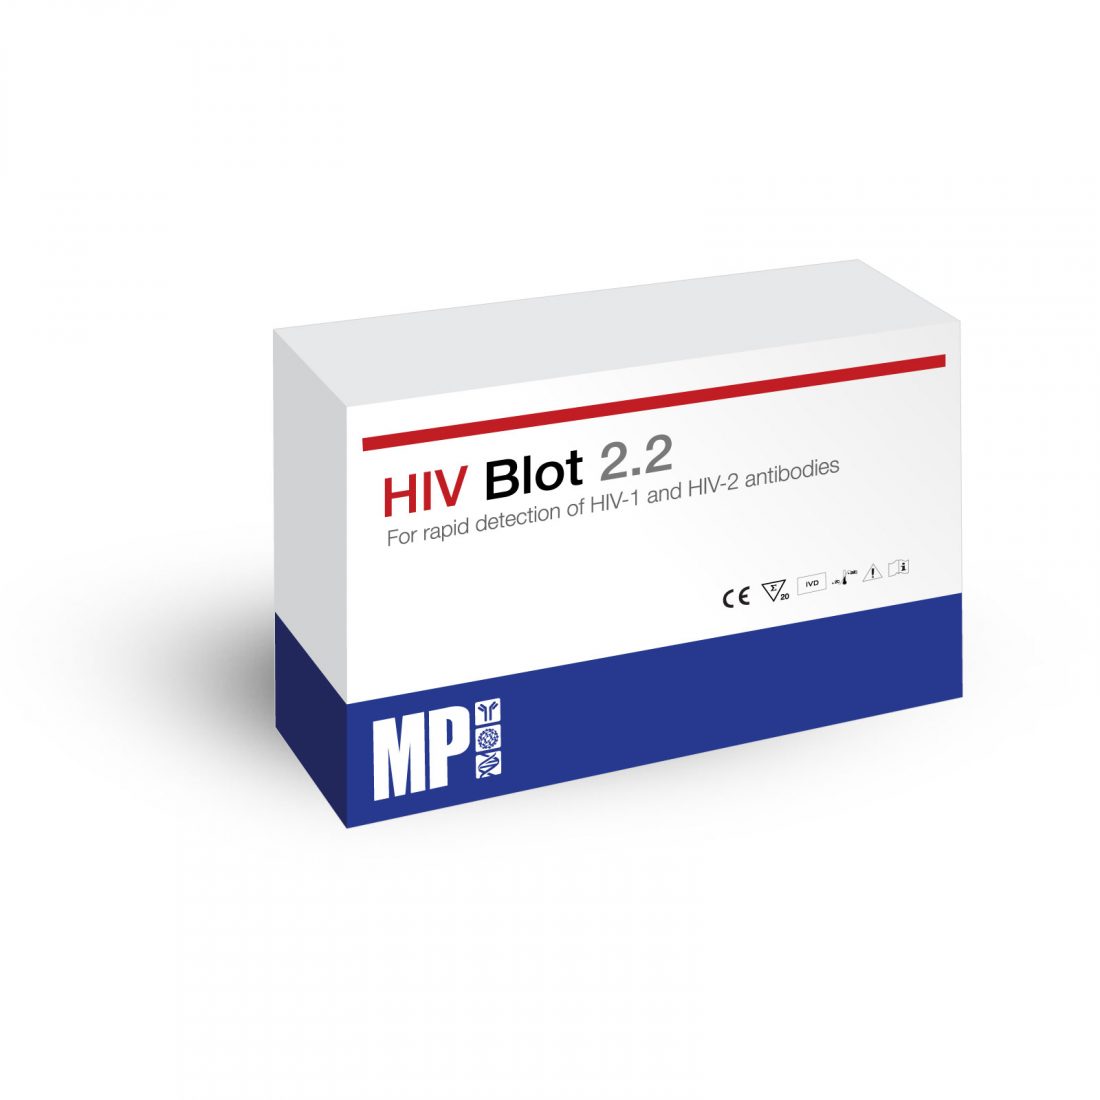 western blot hiv quest lab name